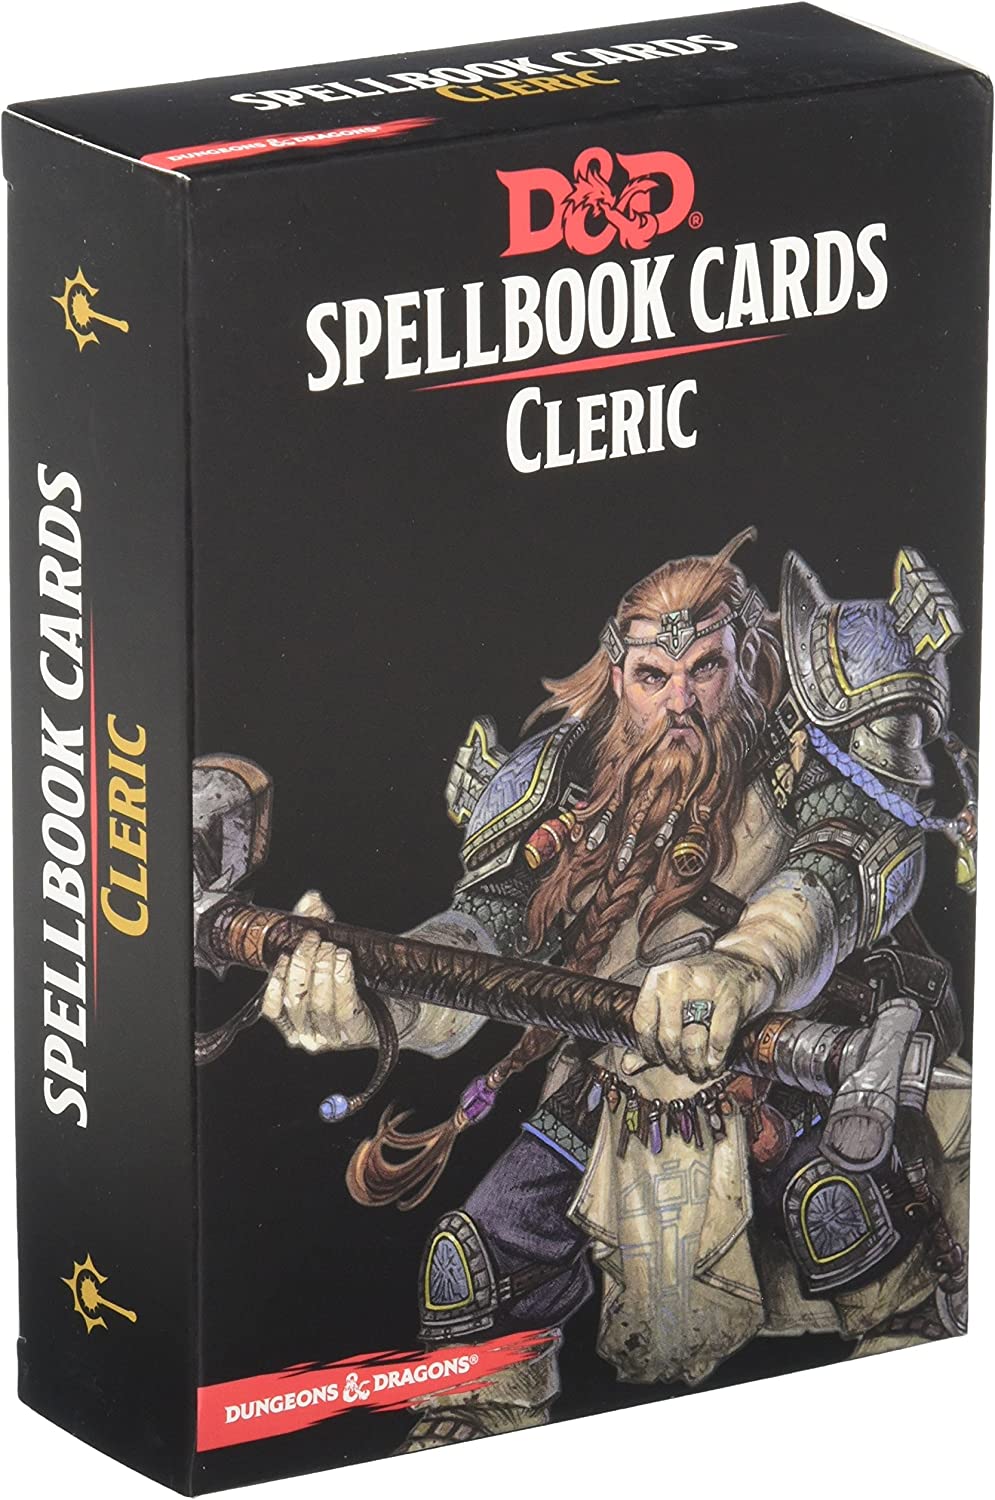 D&D Spellbook Cards Cleric